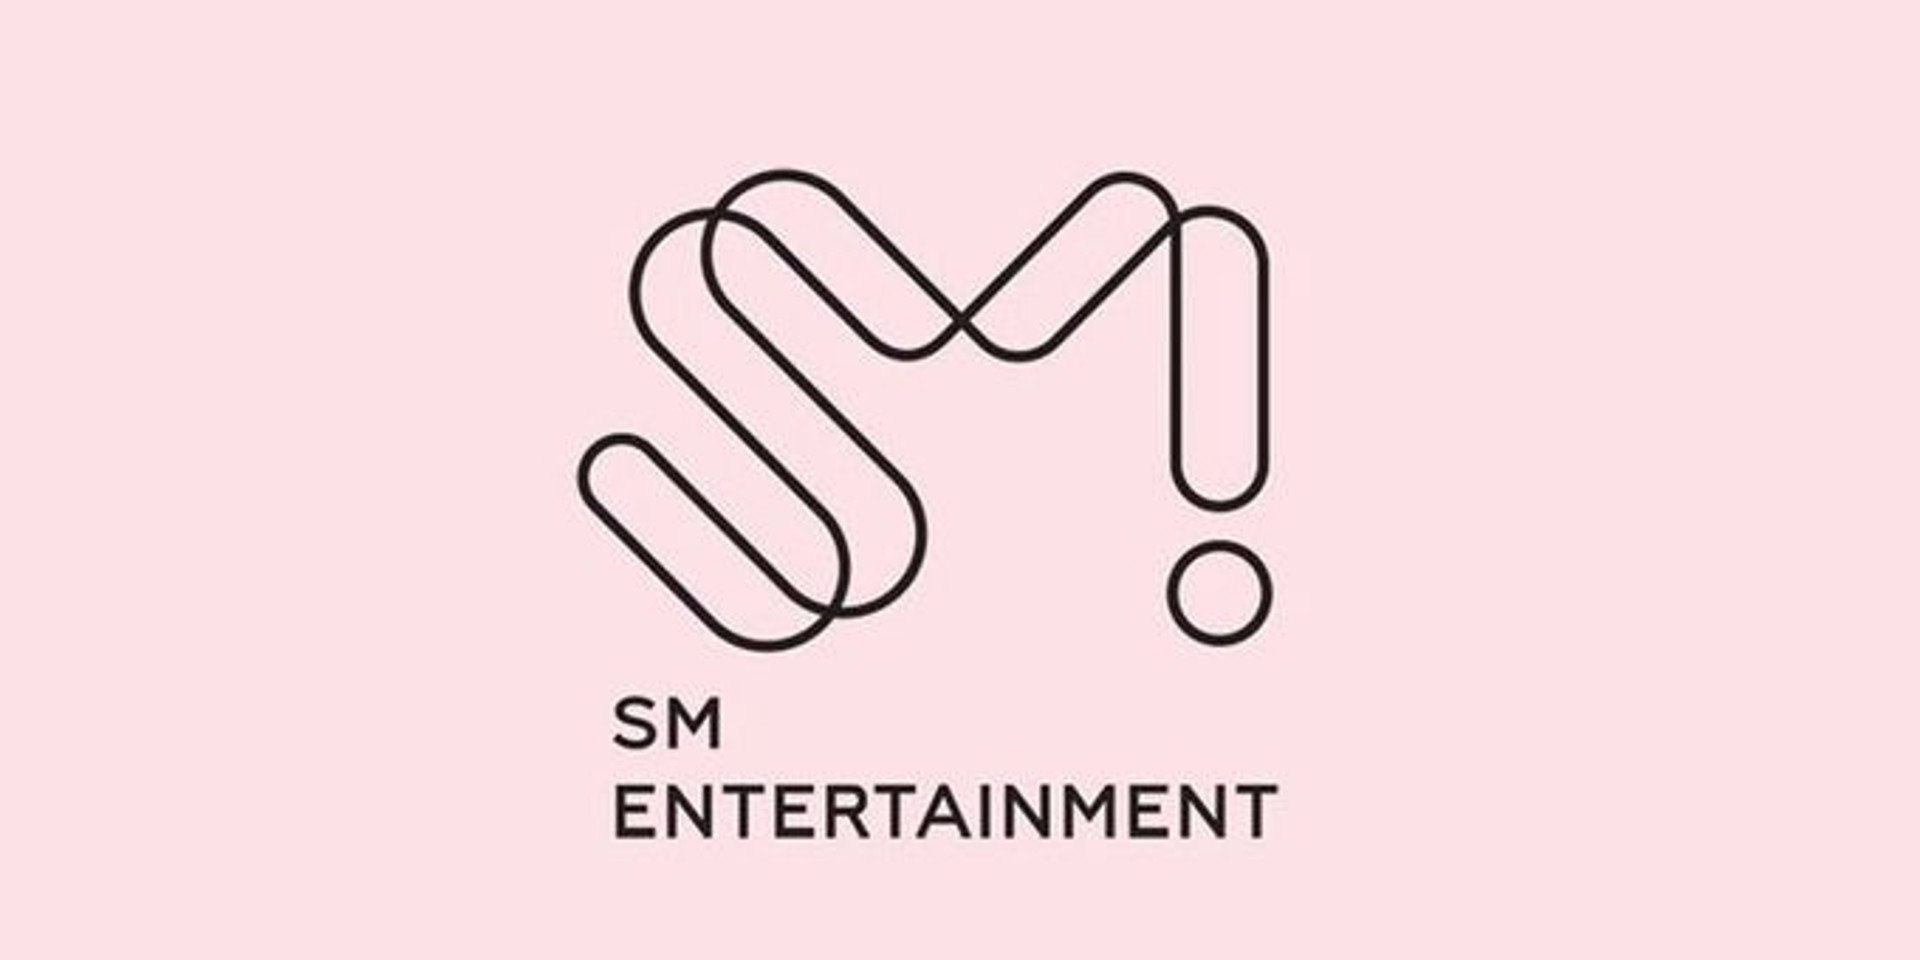 SM Entertainment menjual hampir 18 juta album pada tahun 2021, dipimpin oleh NCT